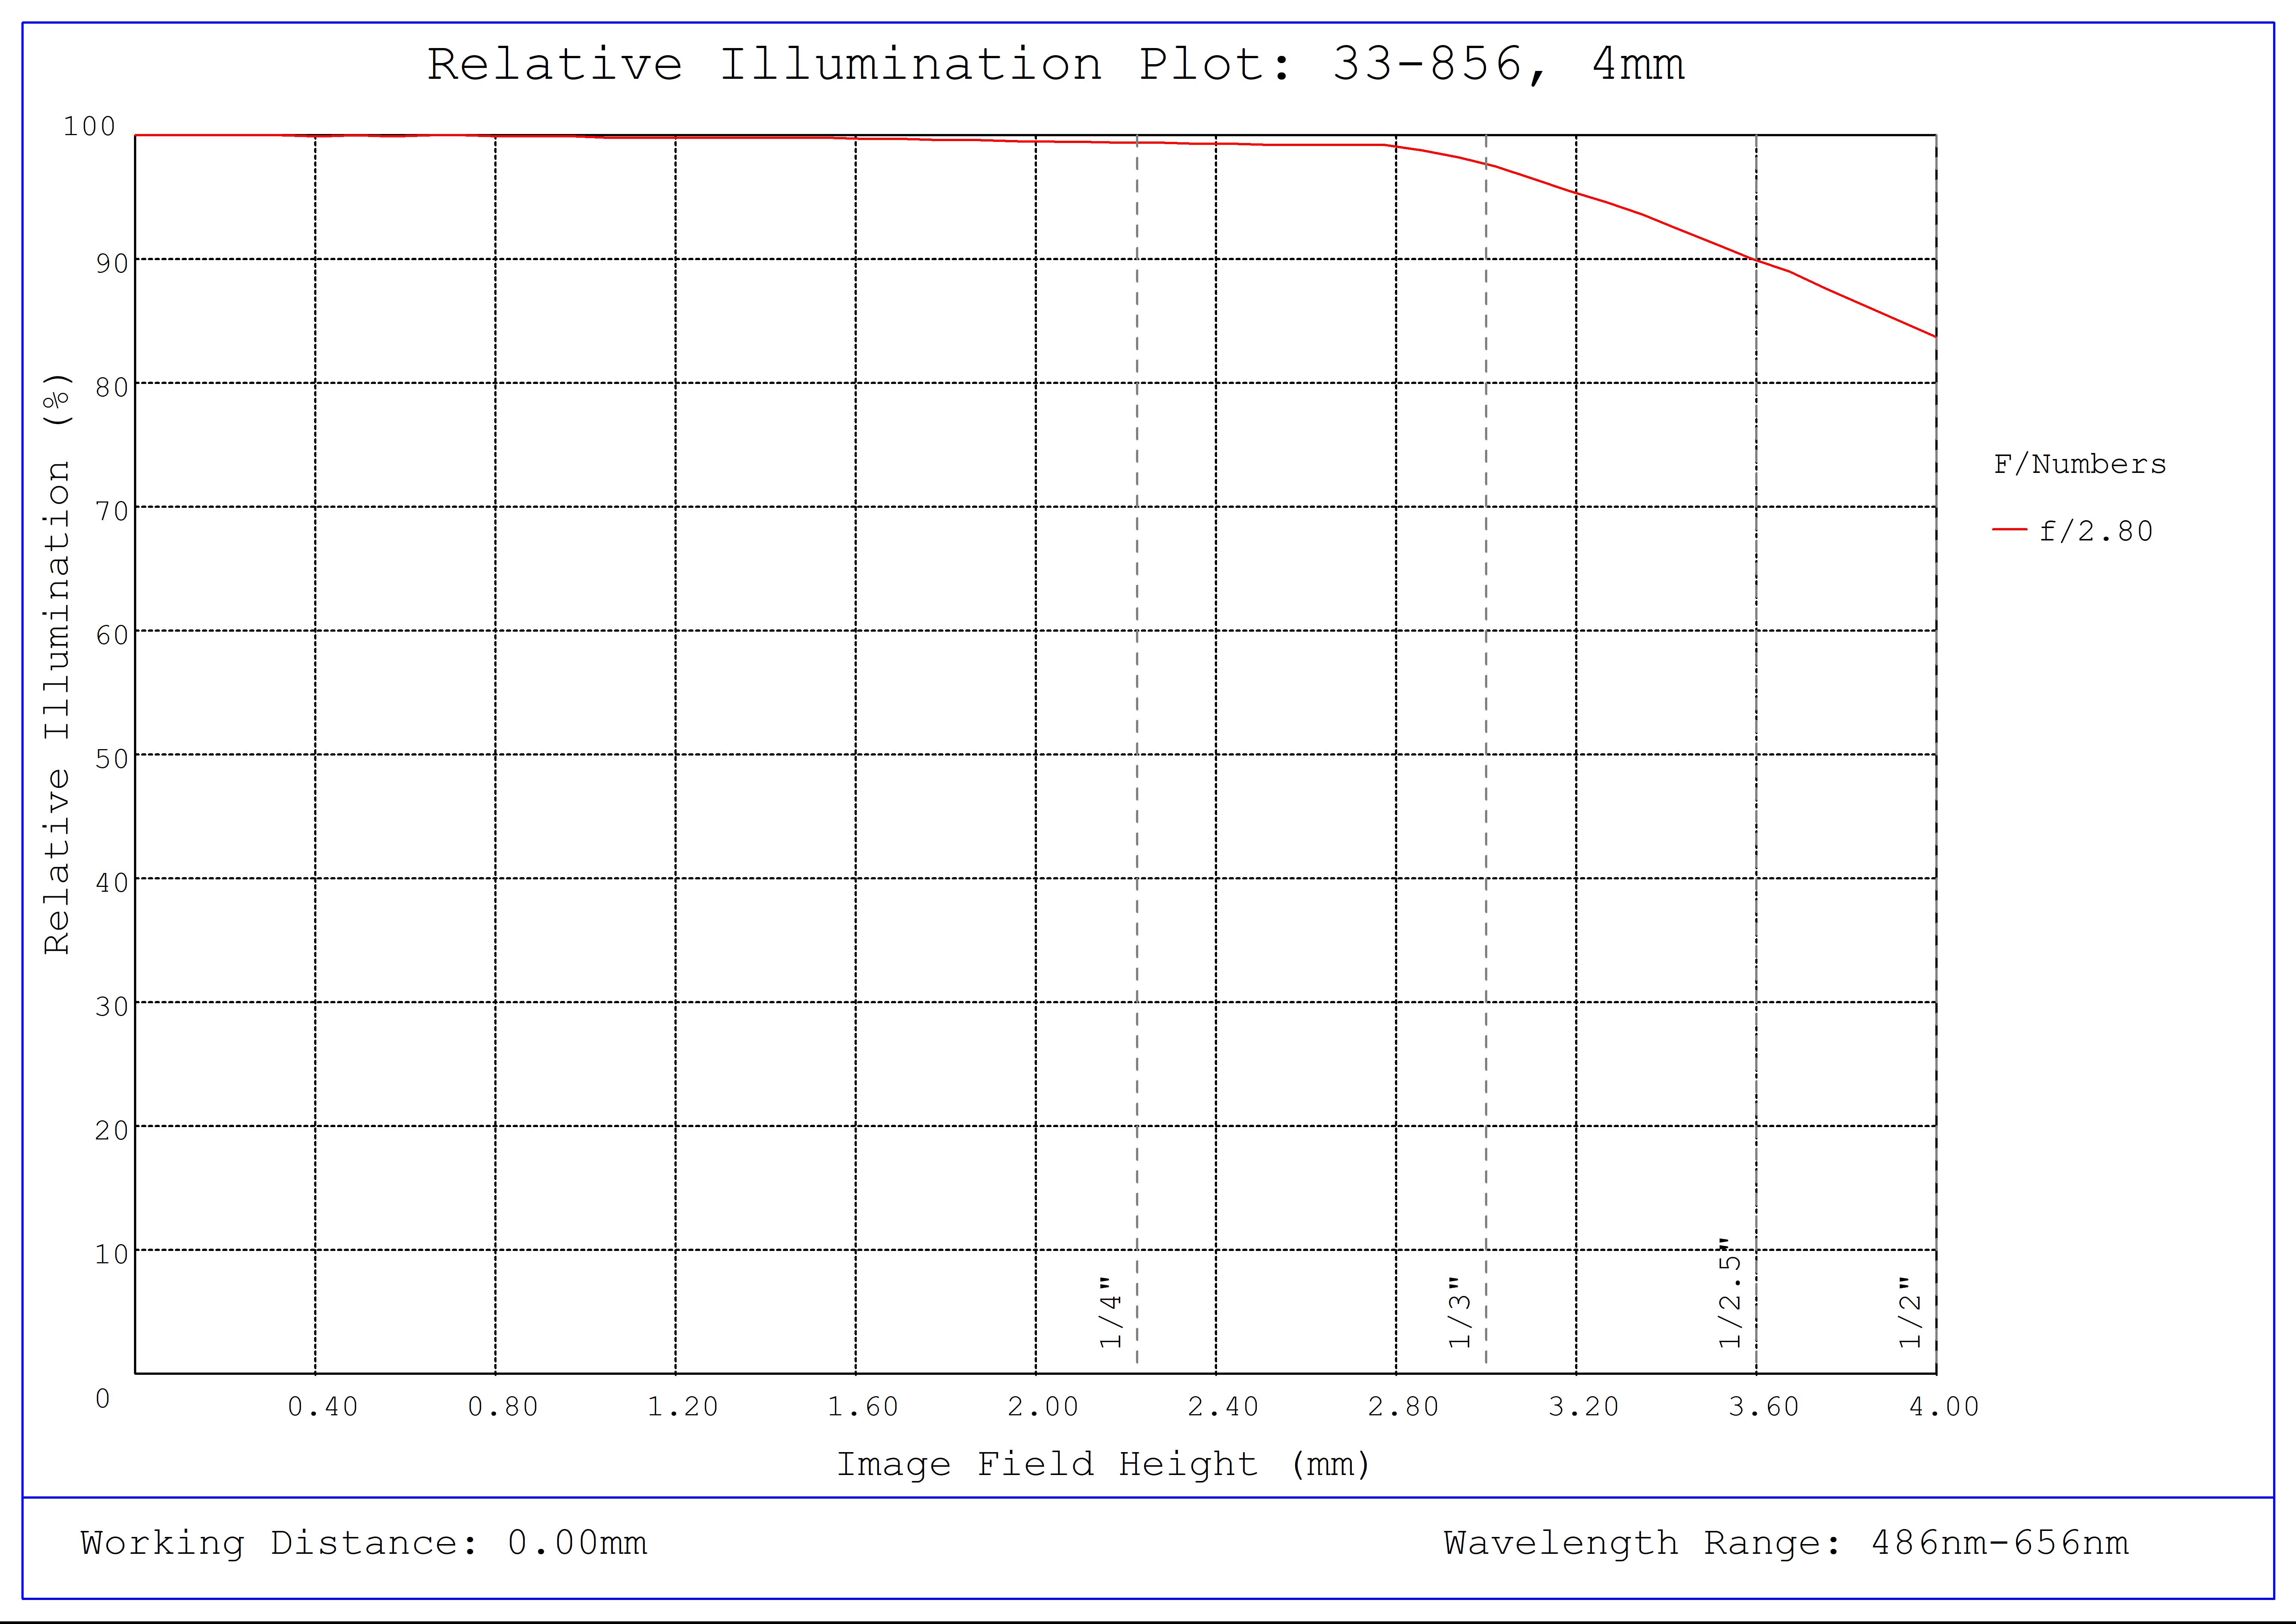 #33-856, 4mm, f/2.8 UCi Series Fixed Focal Length Lens, Relative Illumination Plot